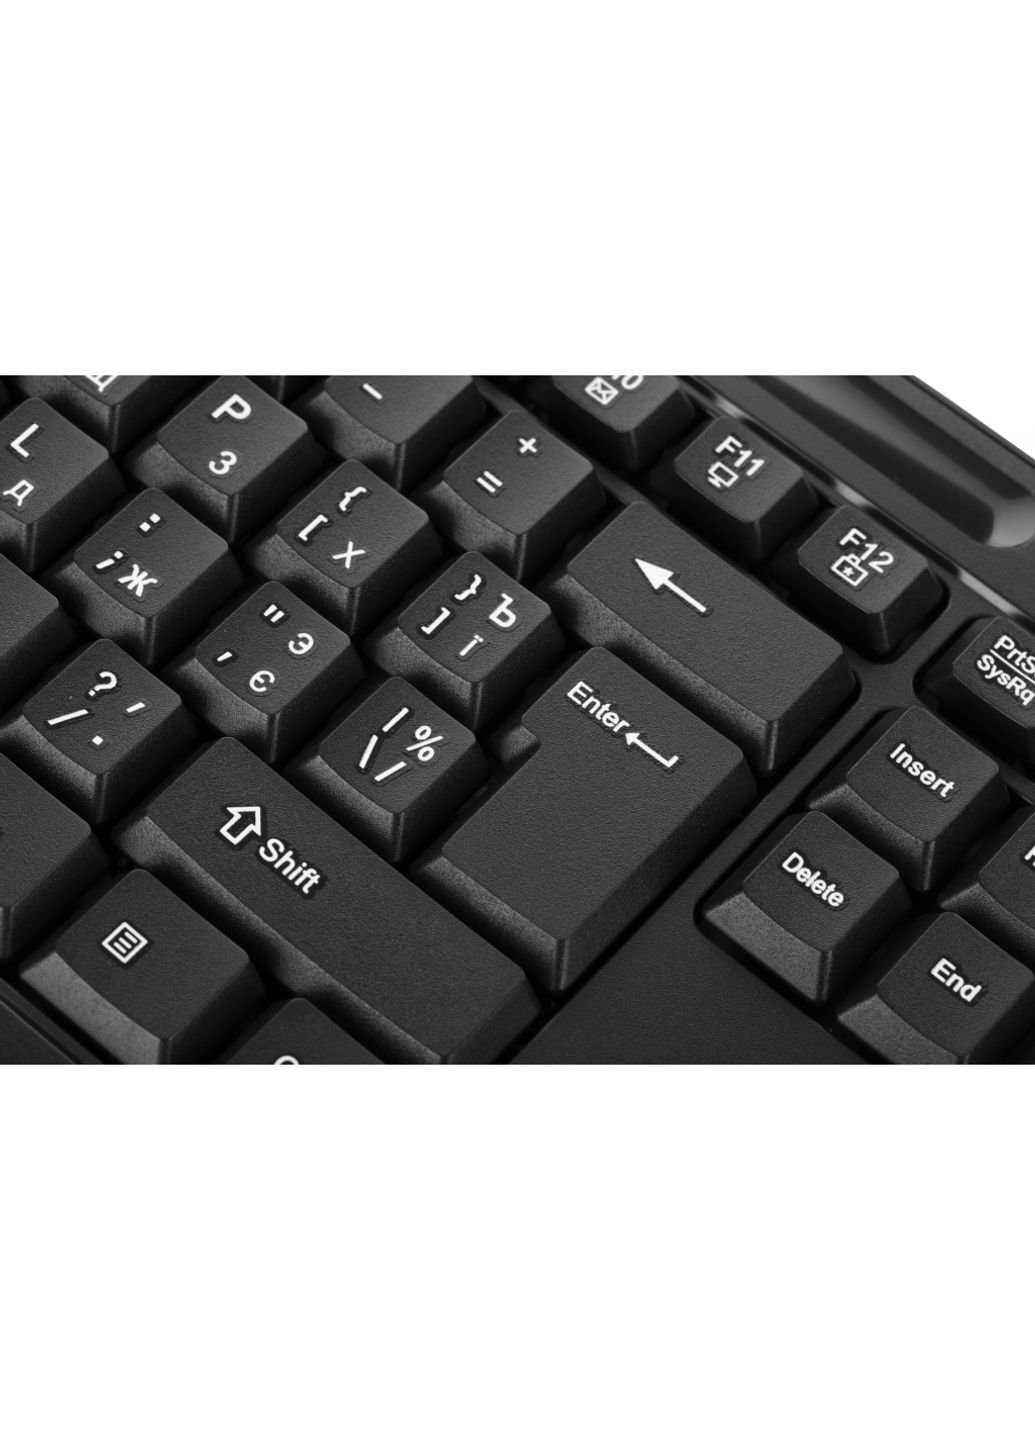 Клавиатура KM1040 USB Black (-KM1040UB) 2E (250604294)